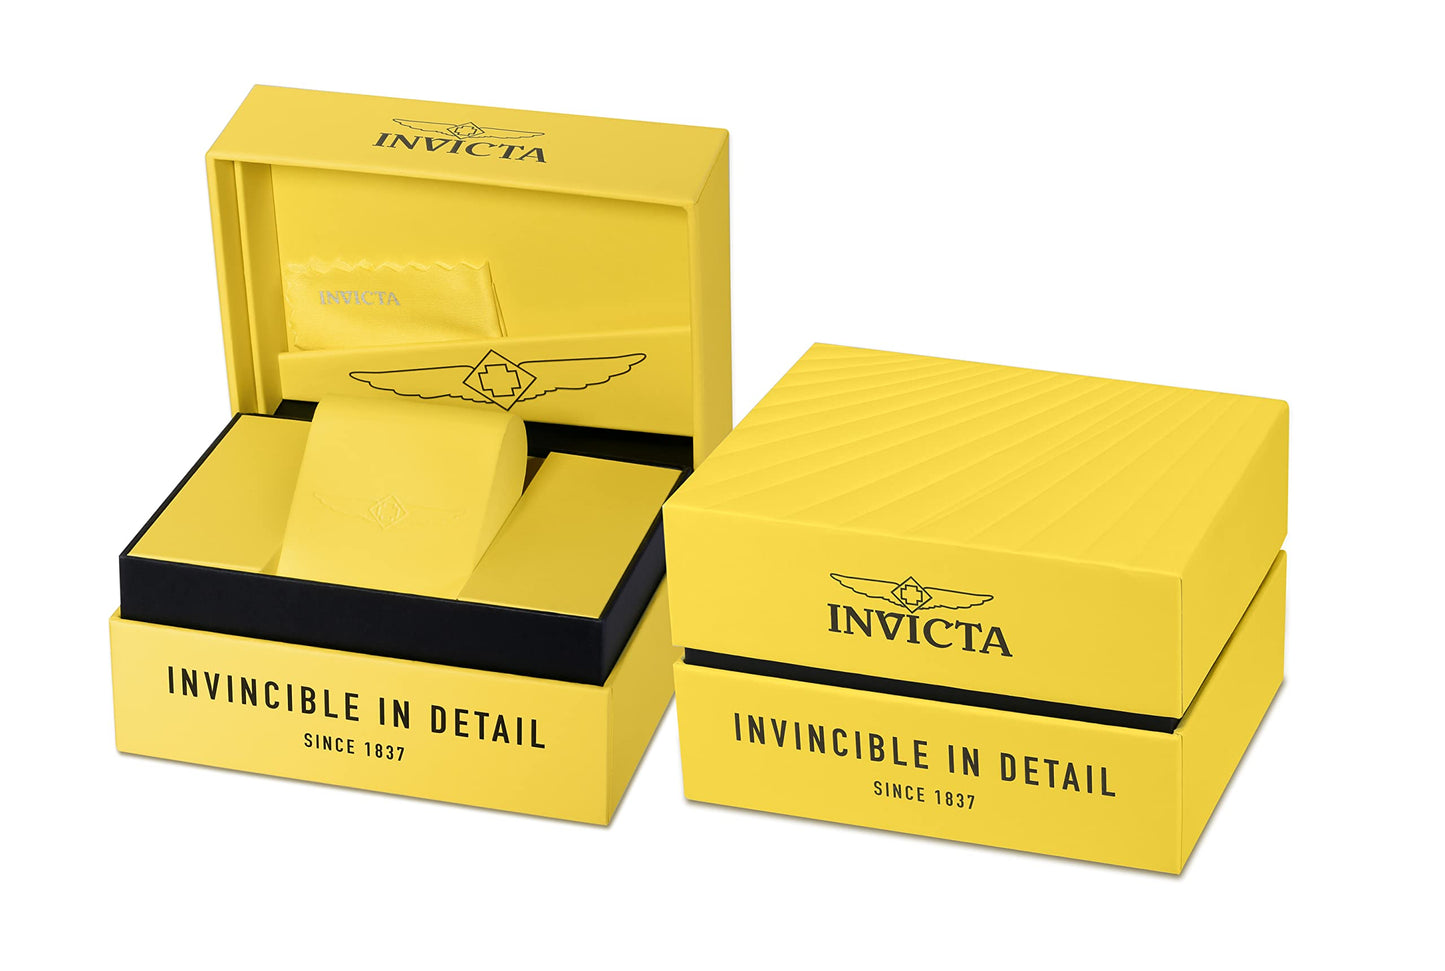 Invicta Men's 'Speedway' Swiss Quartz Stainless Steel and Polyurethane Casual Watch, Color:Orange (Model: 20072)